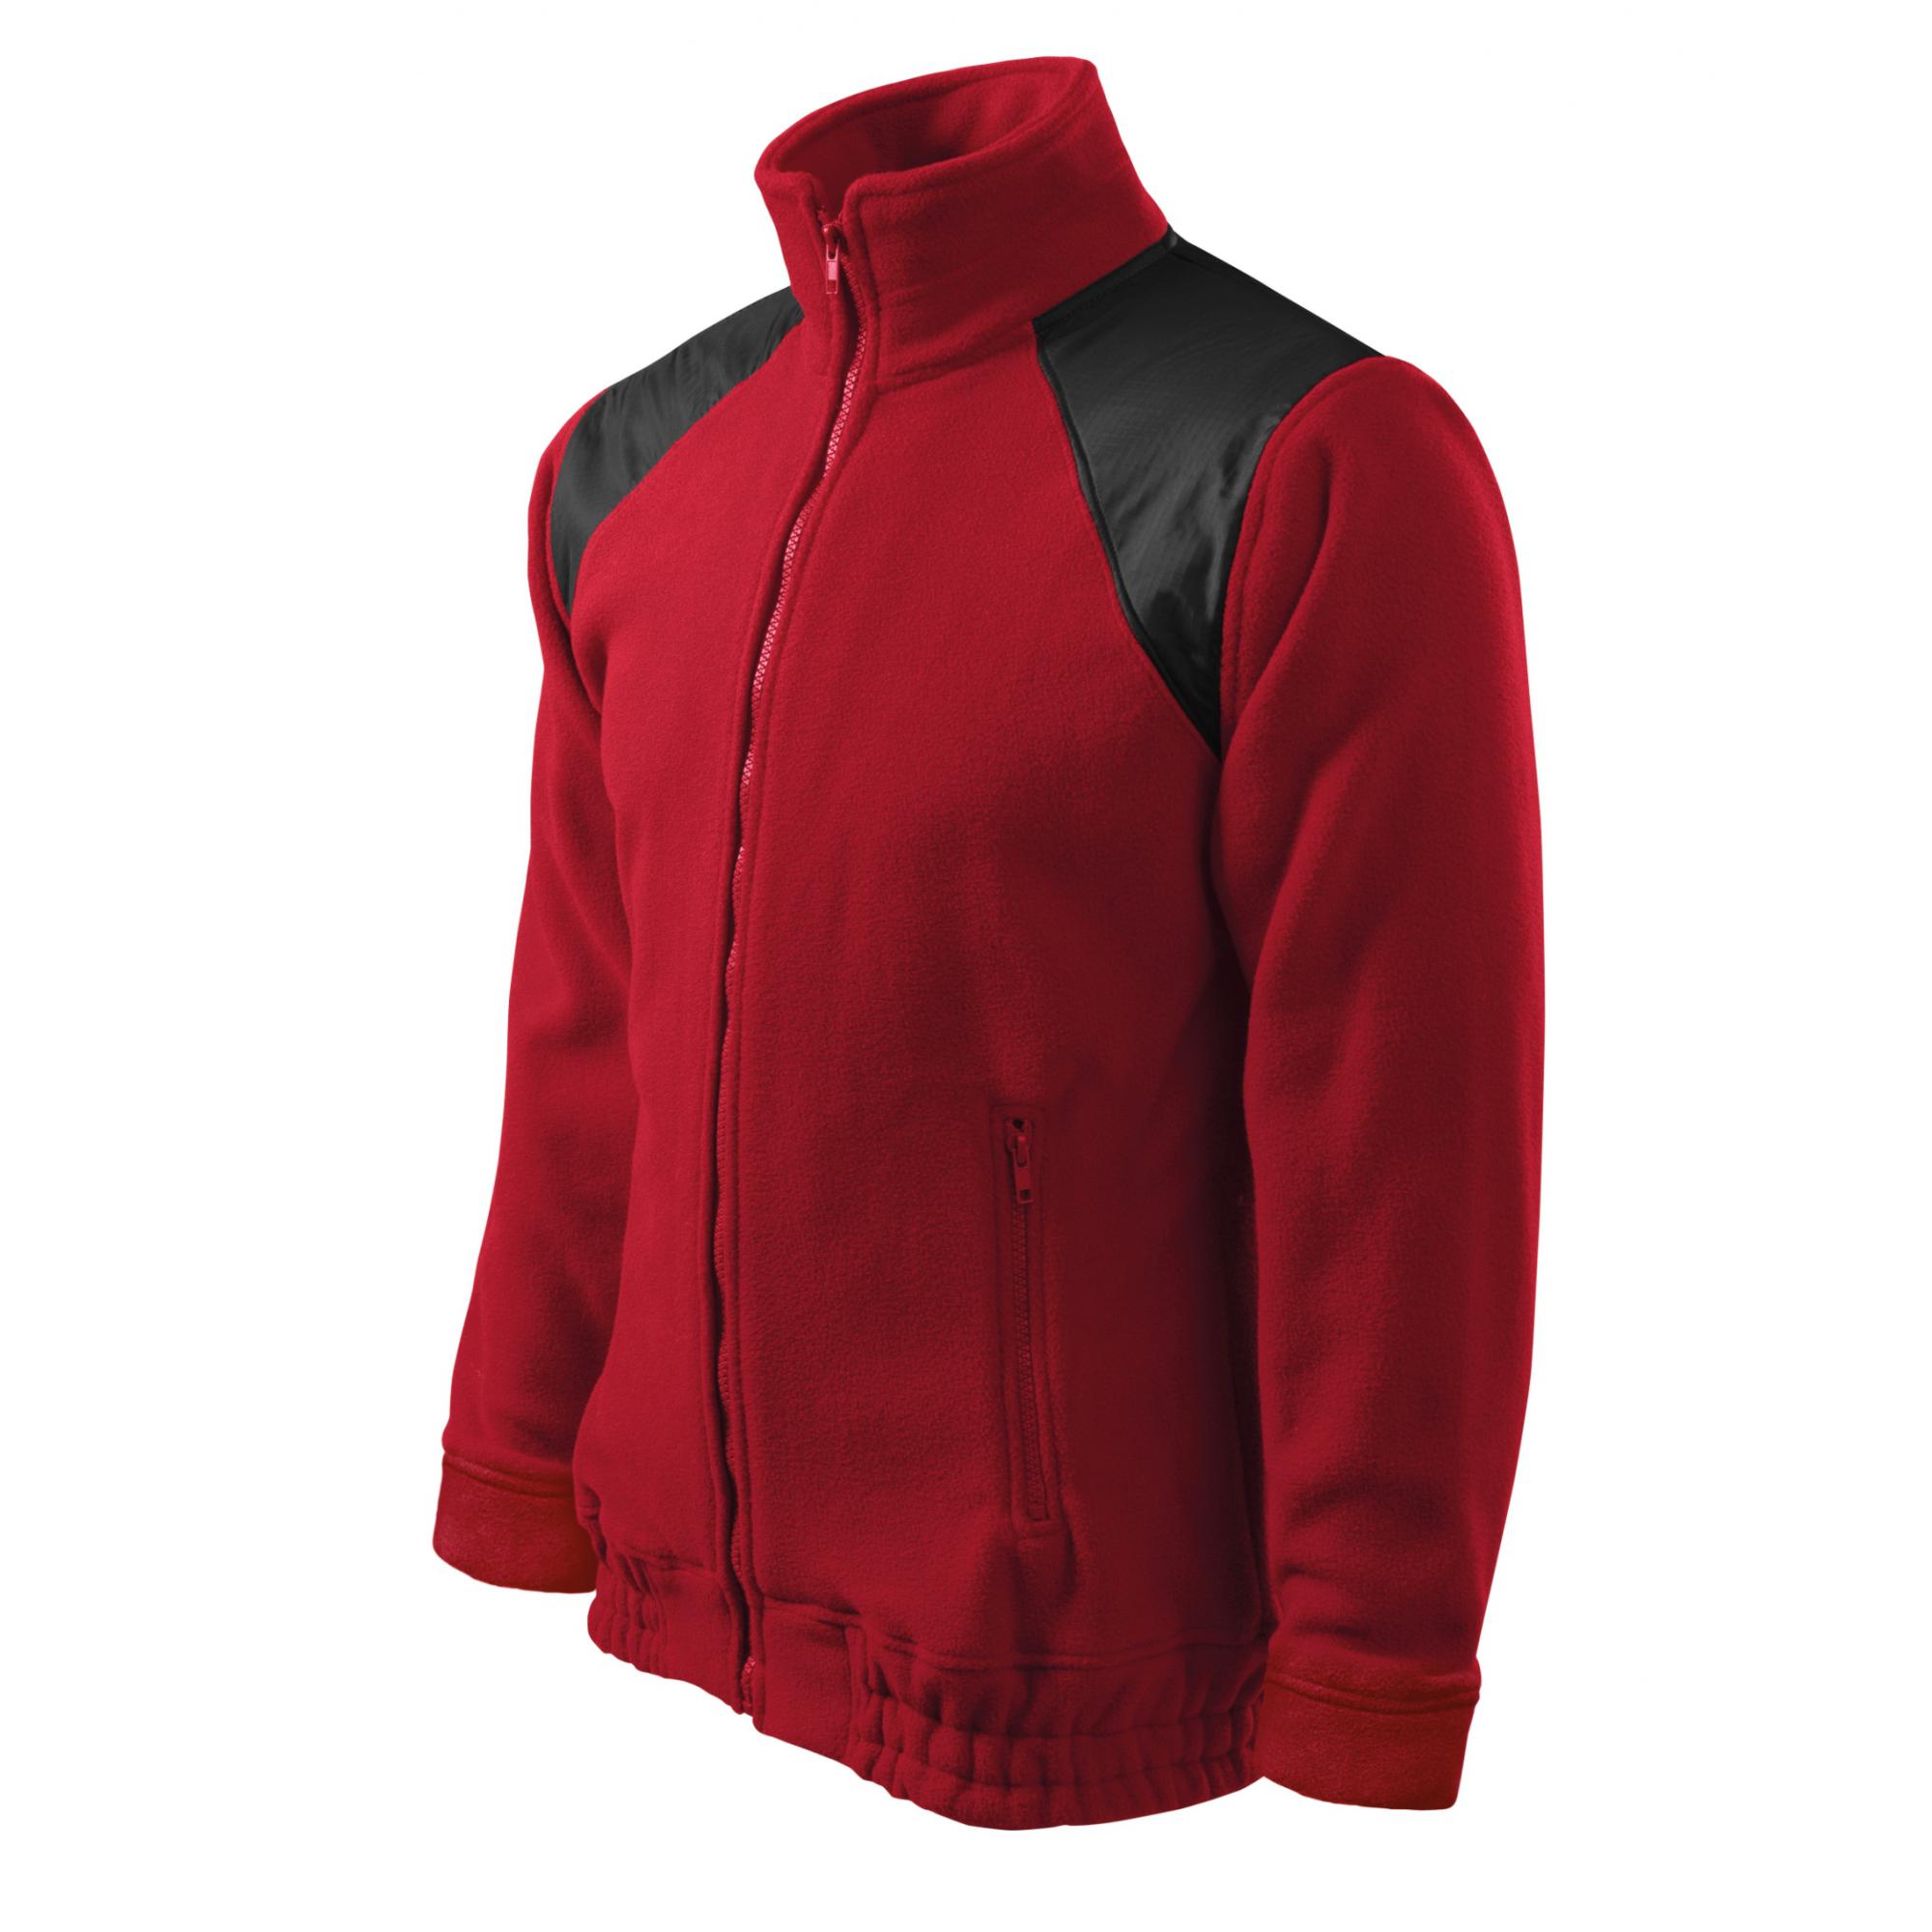 Jachetă fleece unisex Jacket Hi-Q 506 Rosu marlboro S